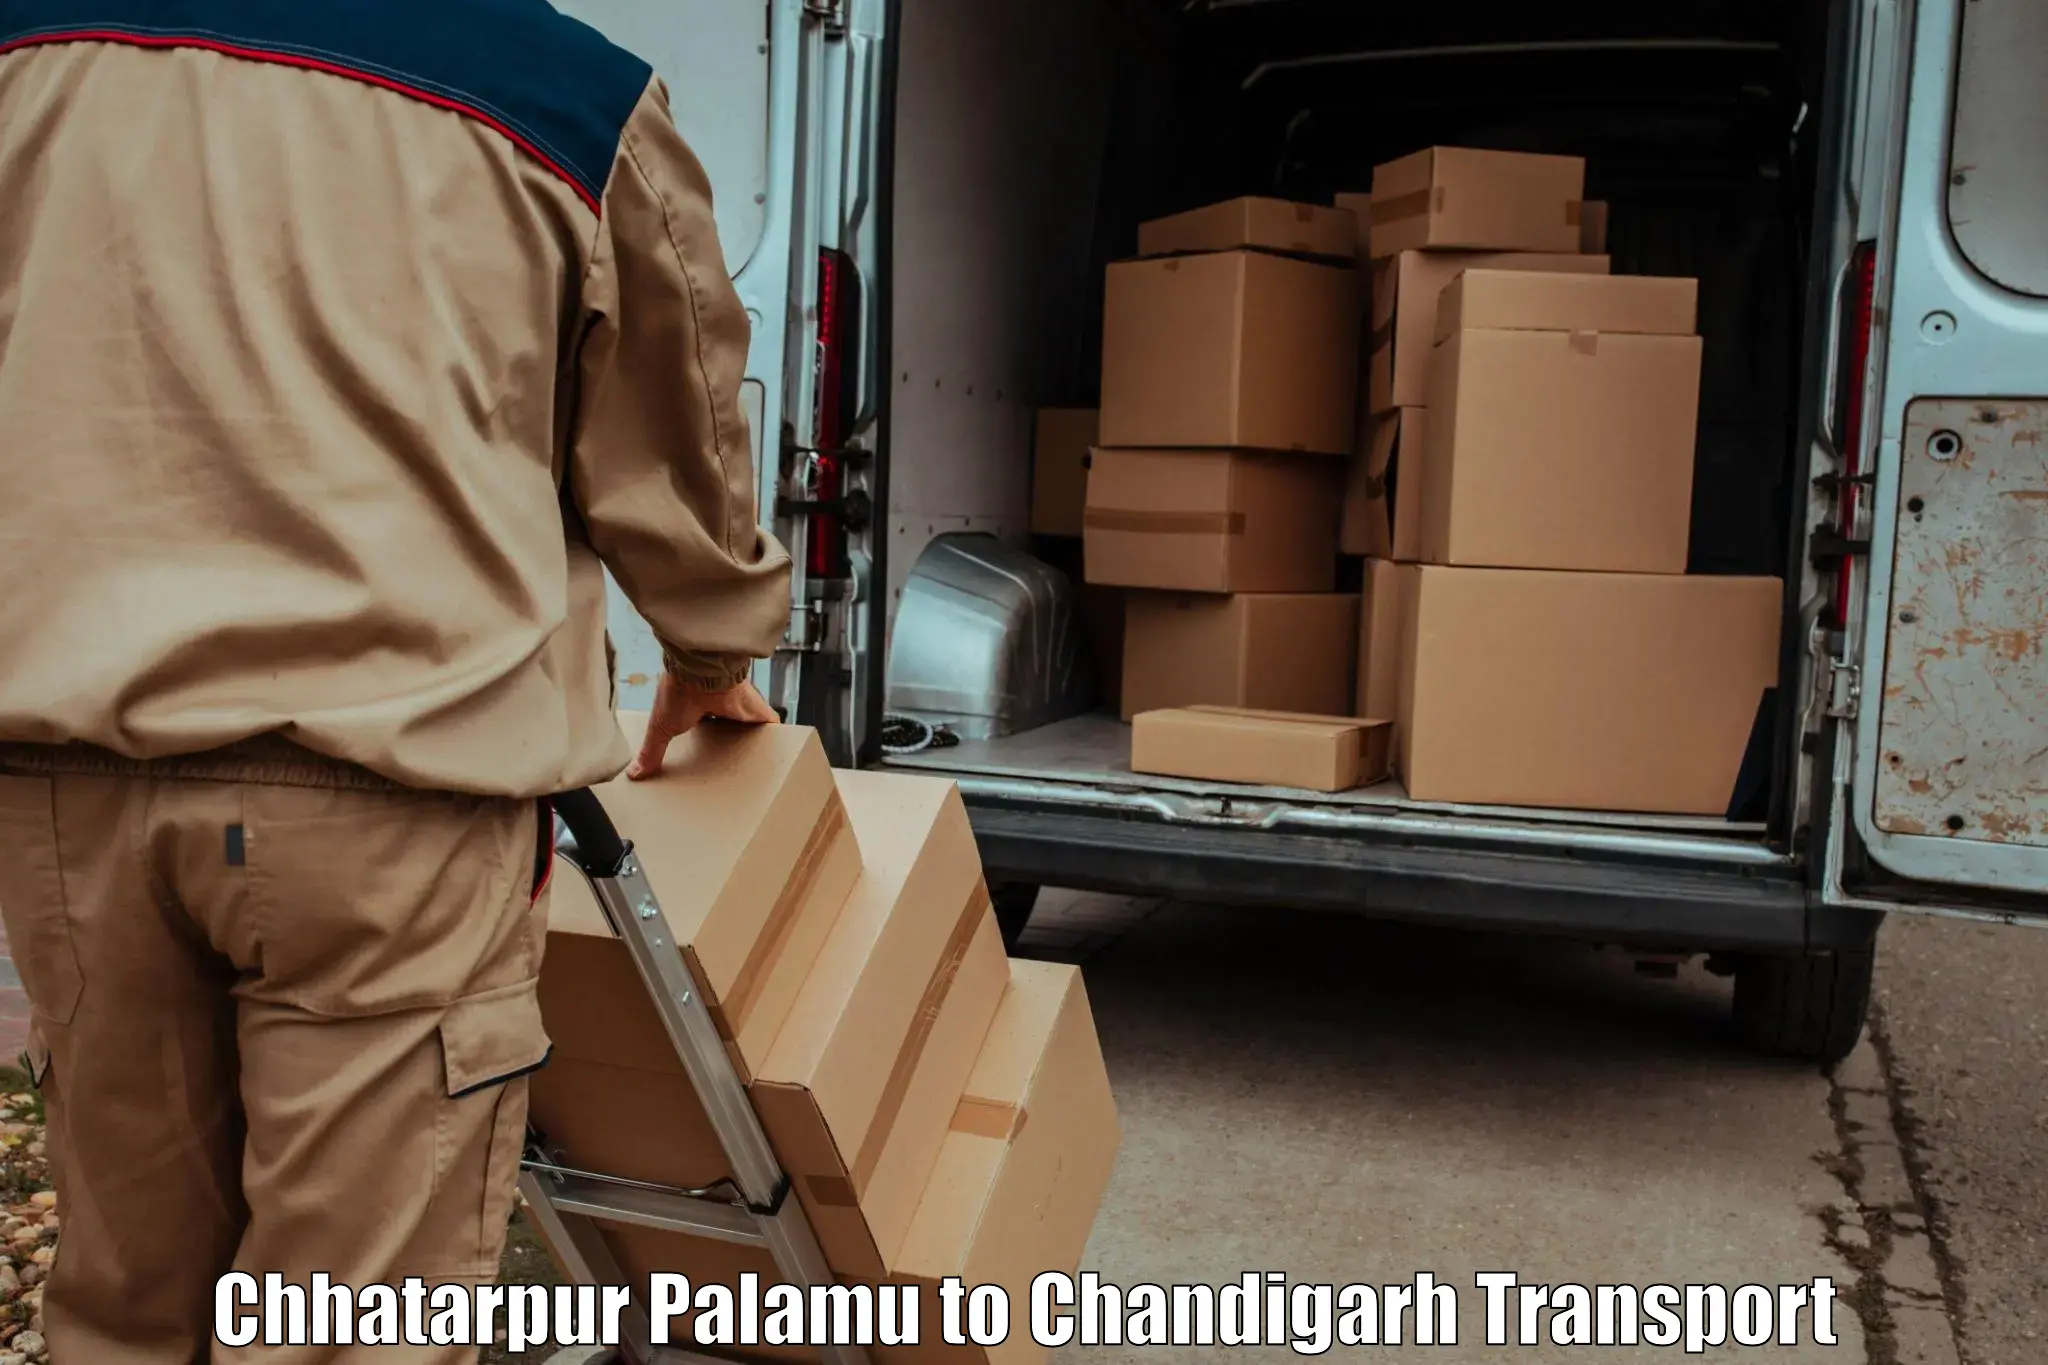 Delivery service Chhatarpur Palamu to Chandigarh